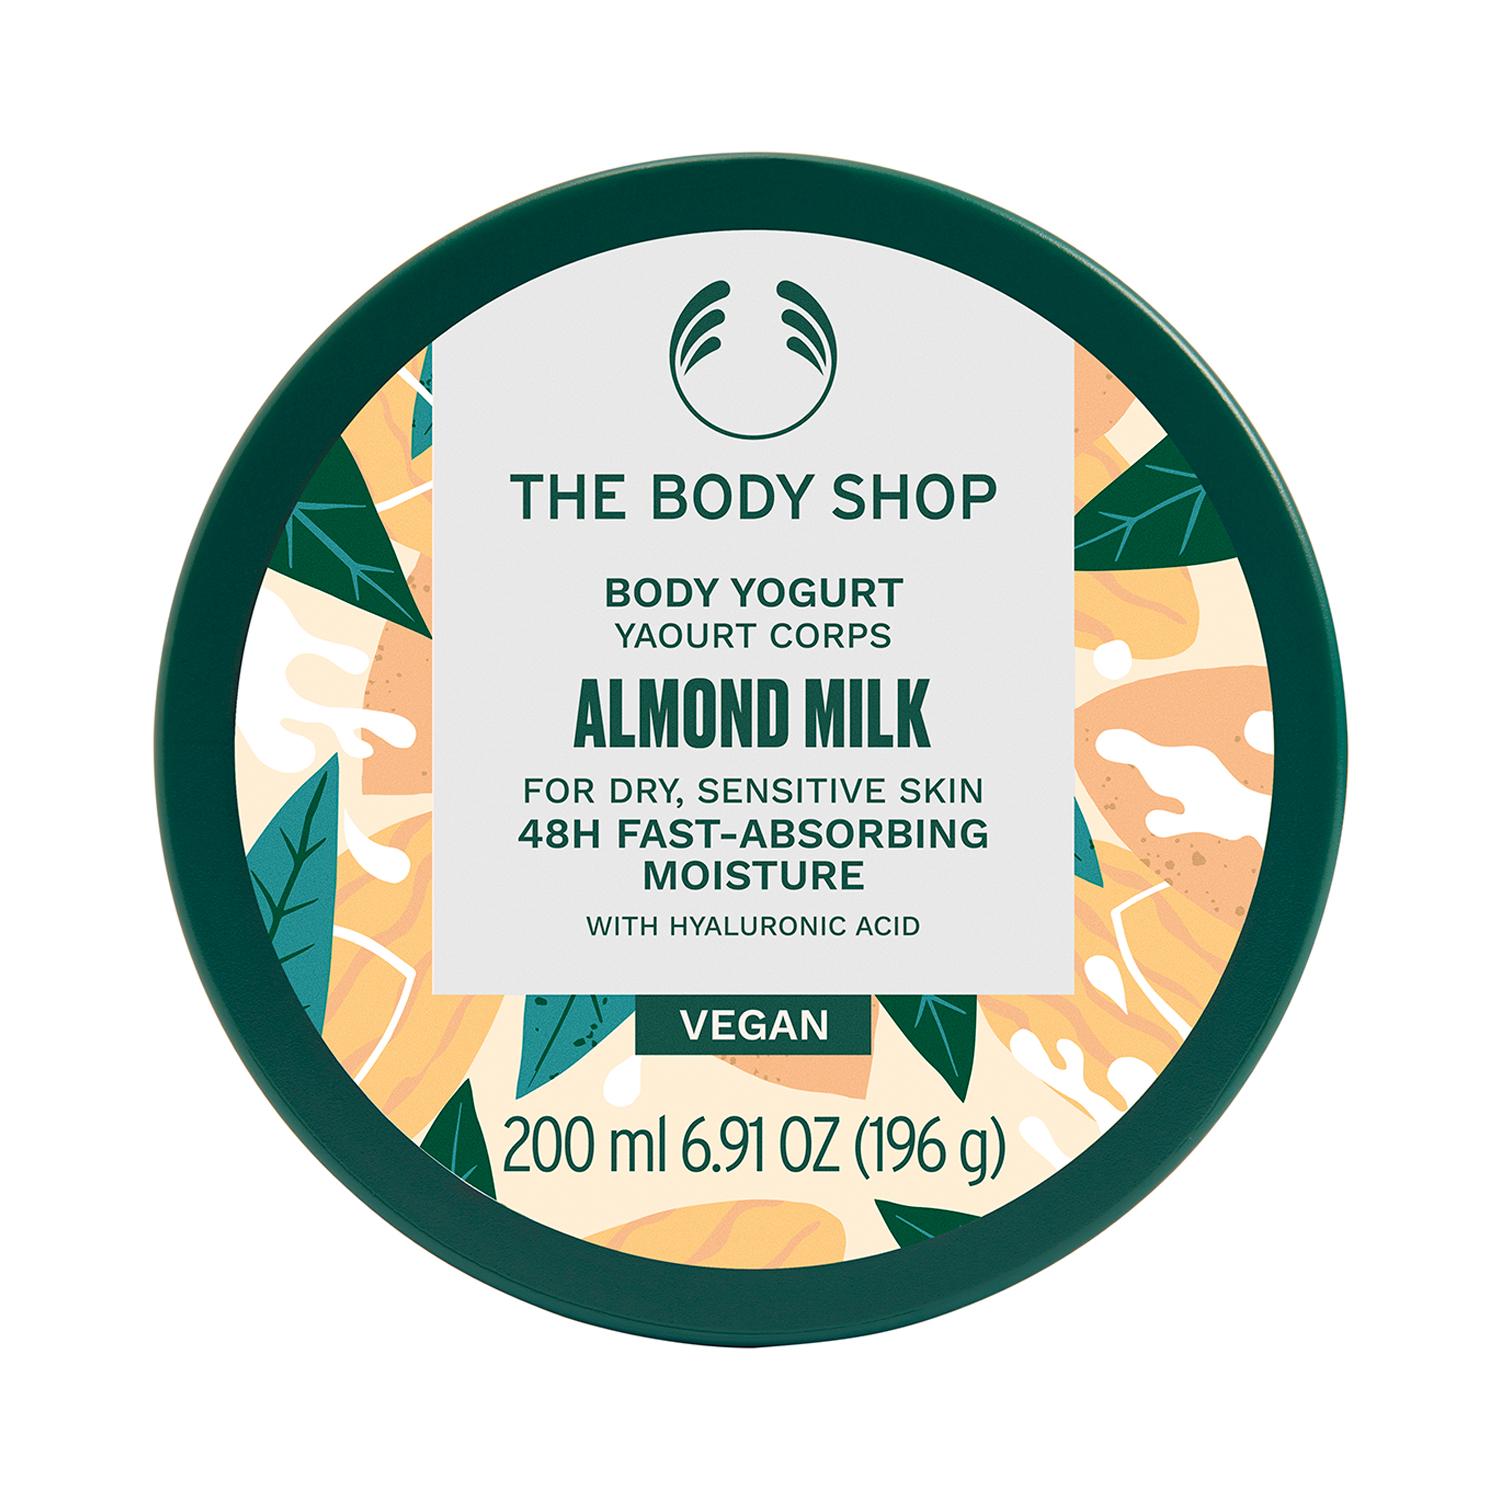 The Body Shop | The Body Shop Almond Milk Body Yogurt (200ml)